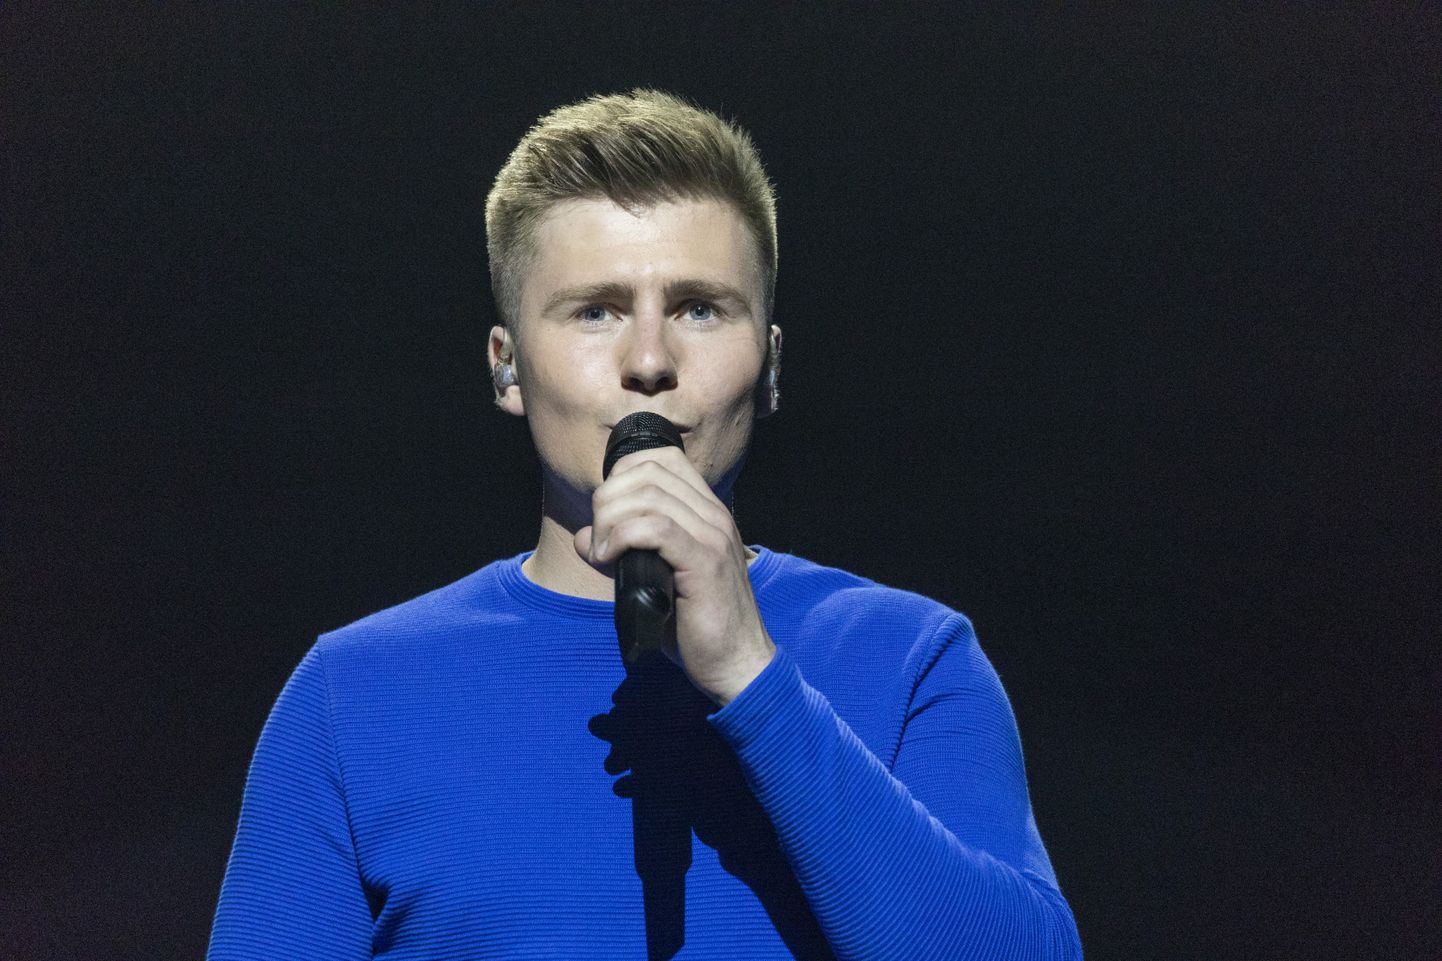 Uudo Sepp "Eesti otsib superstaari 2018" finaalshow